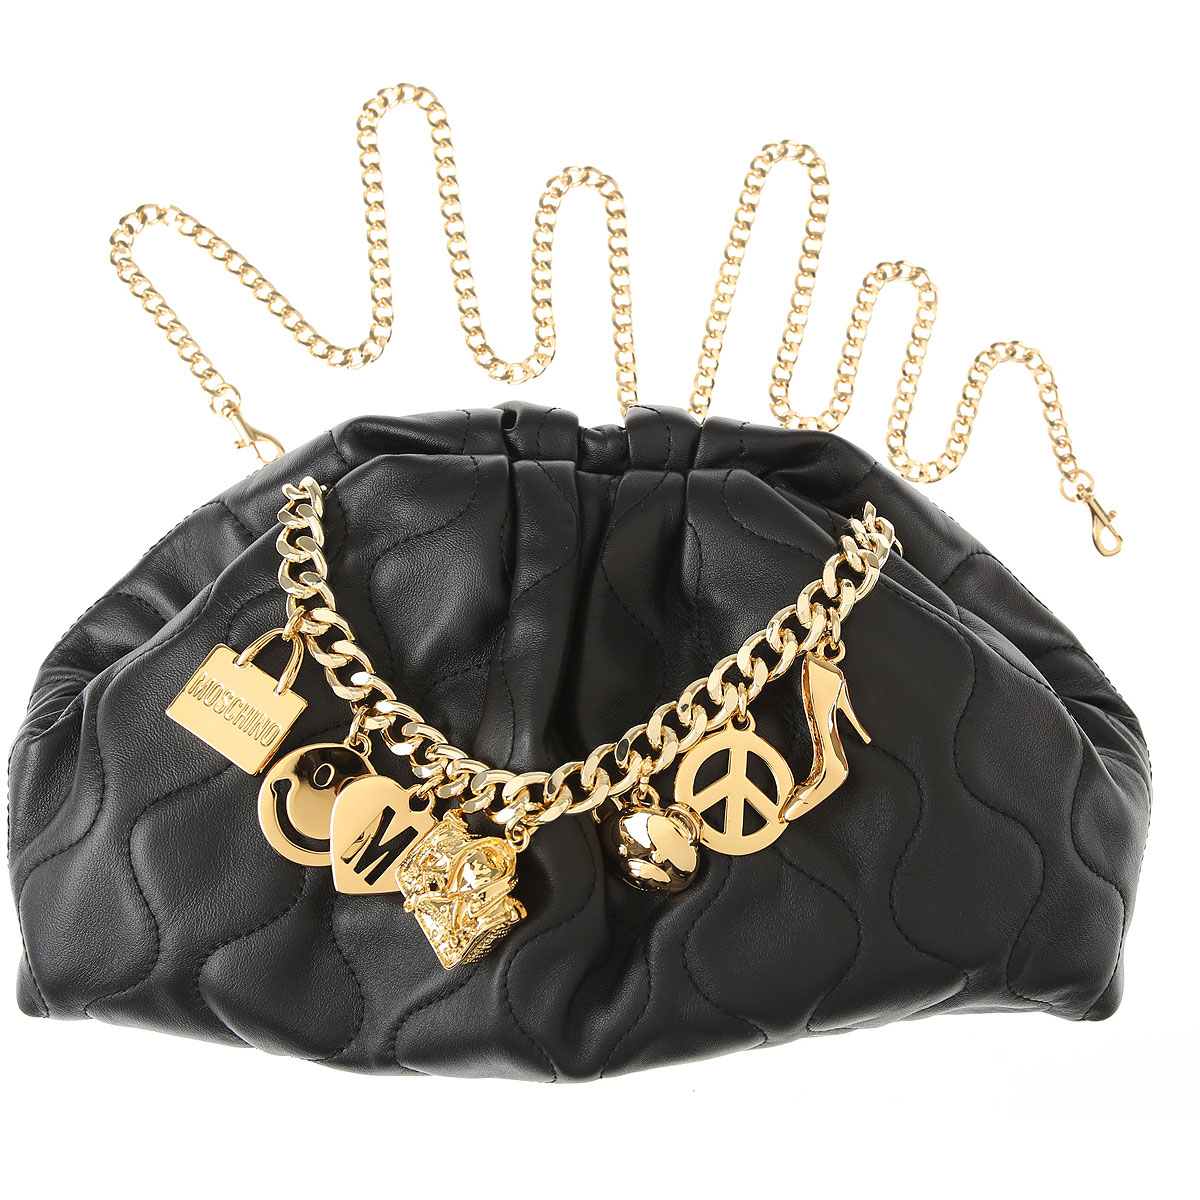 Handbags Moschino, Style code: a7427-8002-6555